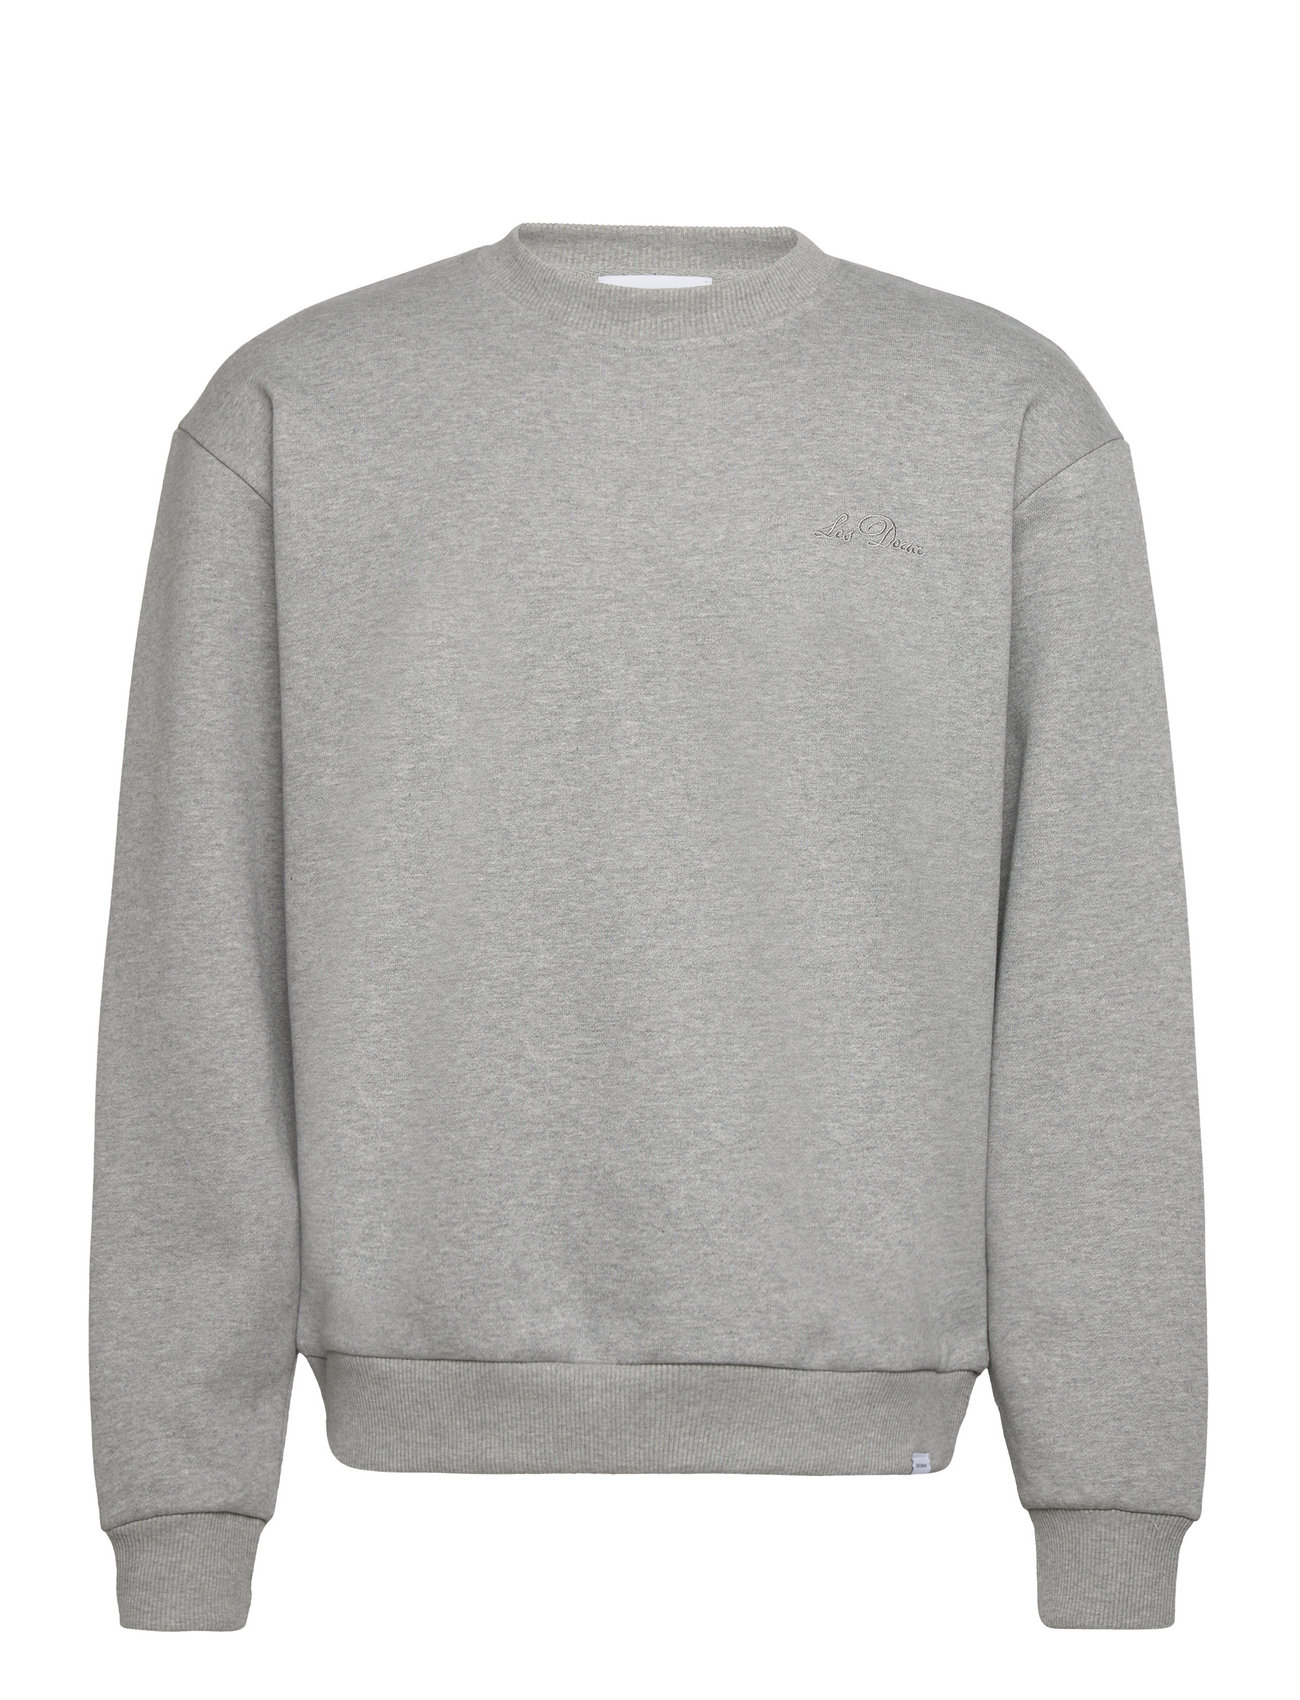 Crew Sweatshirt Tops Sweatshirts & Hoodies Hoodies Grey Les Deux